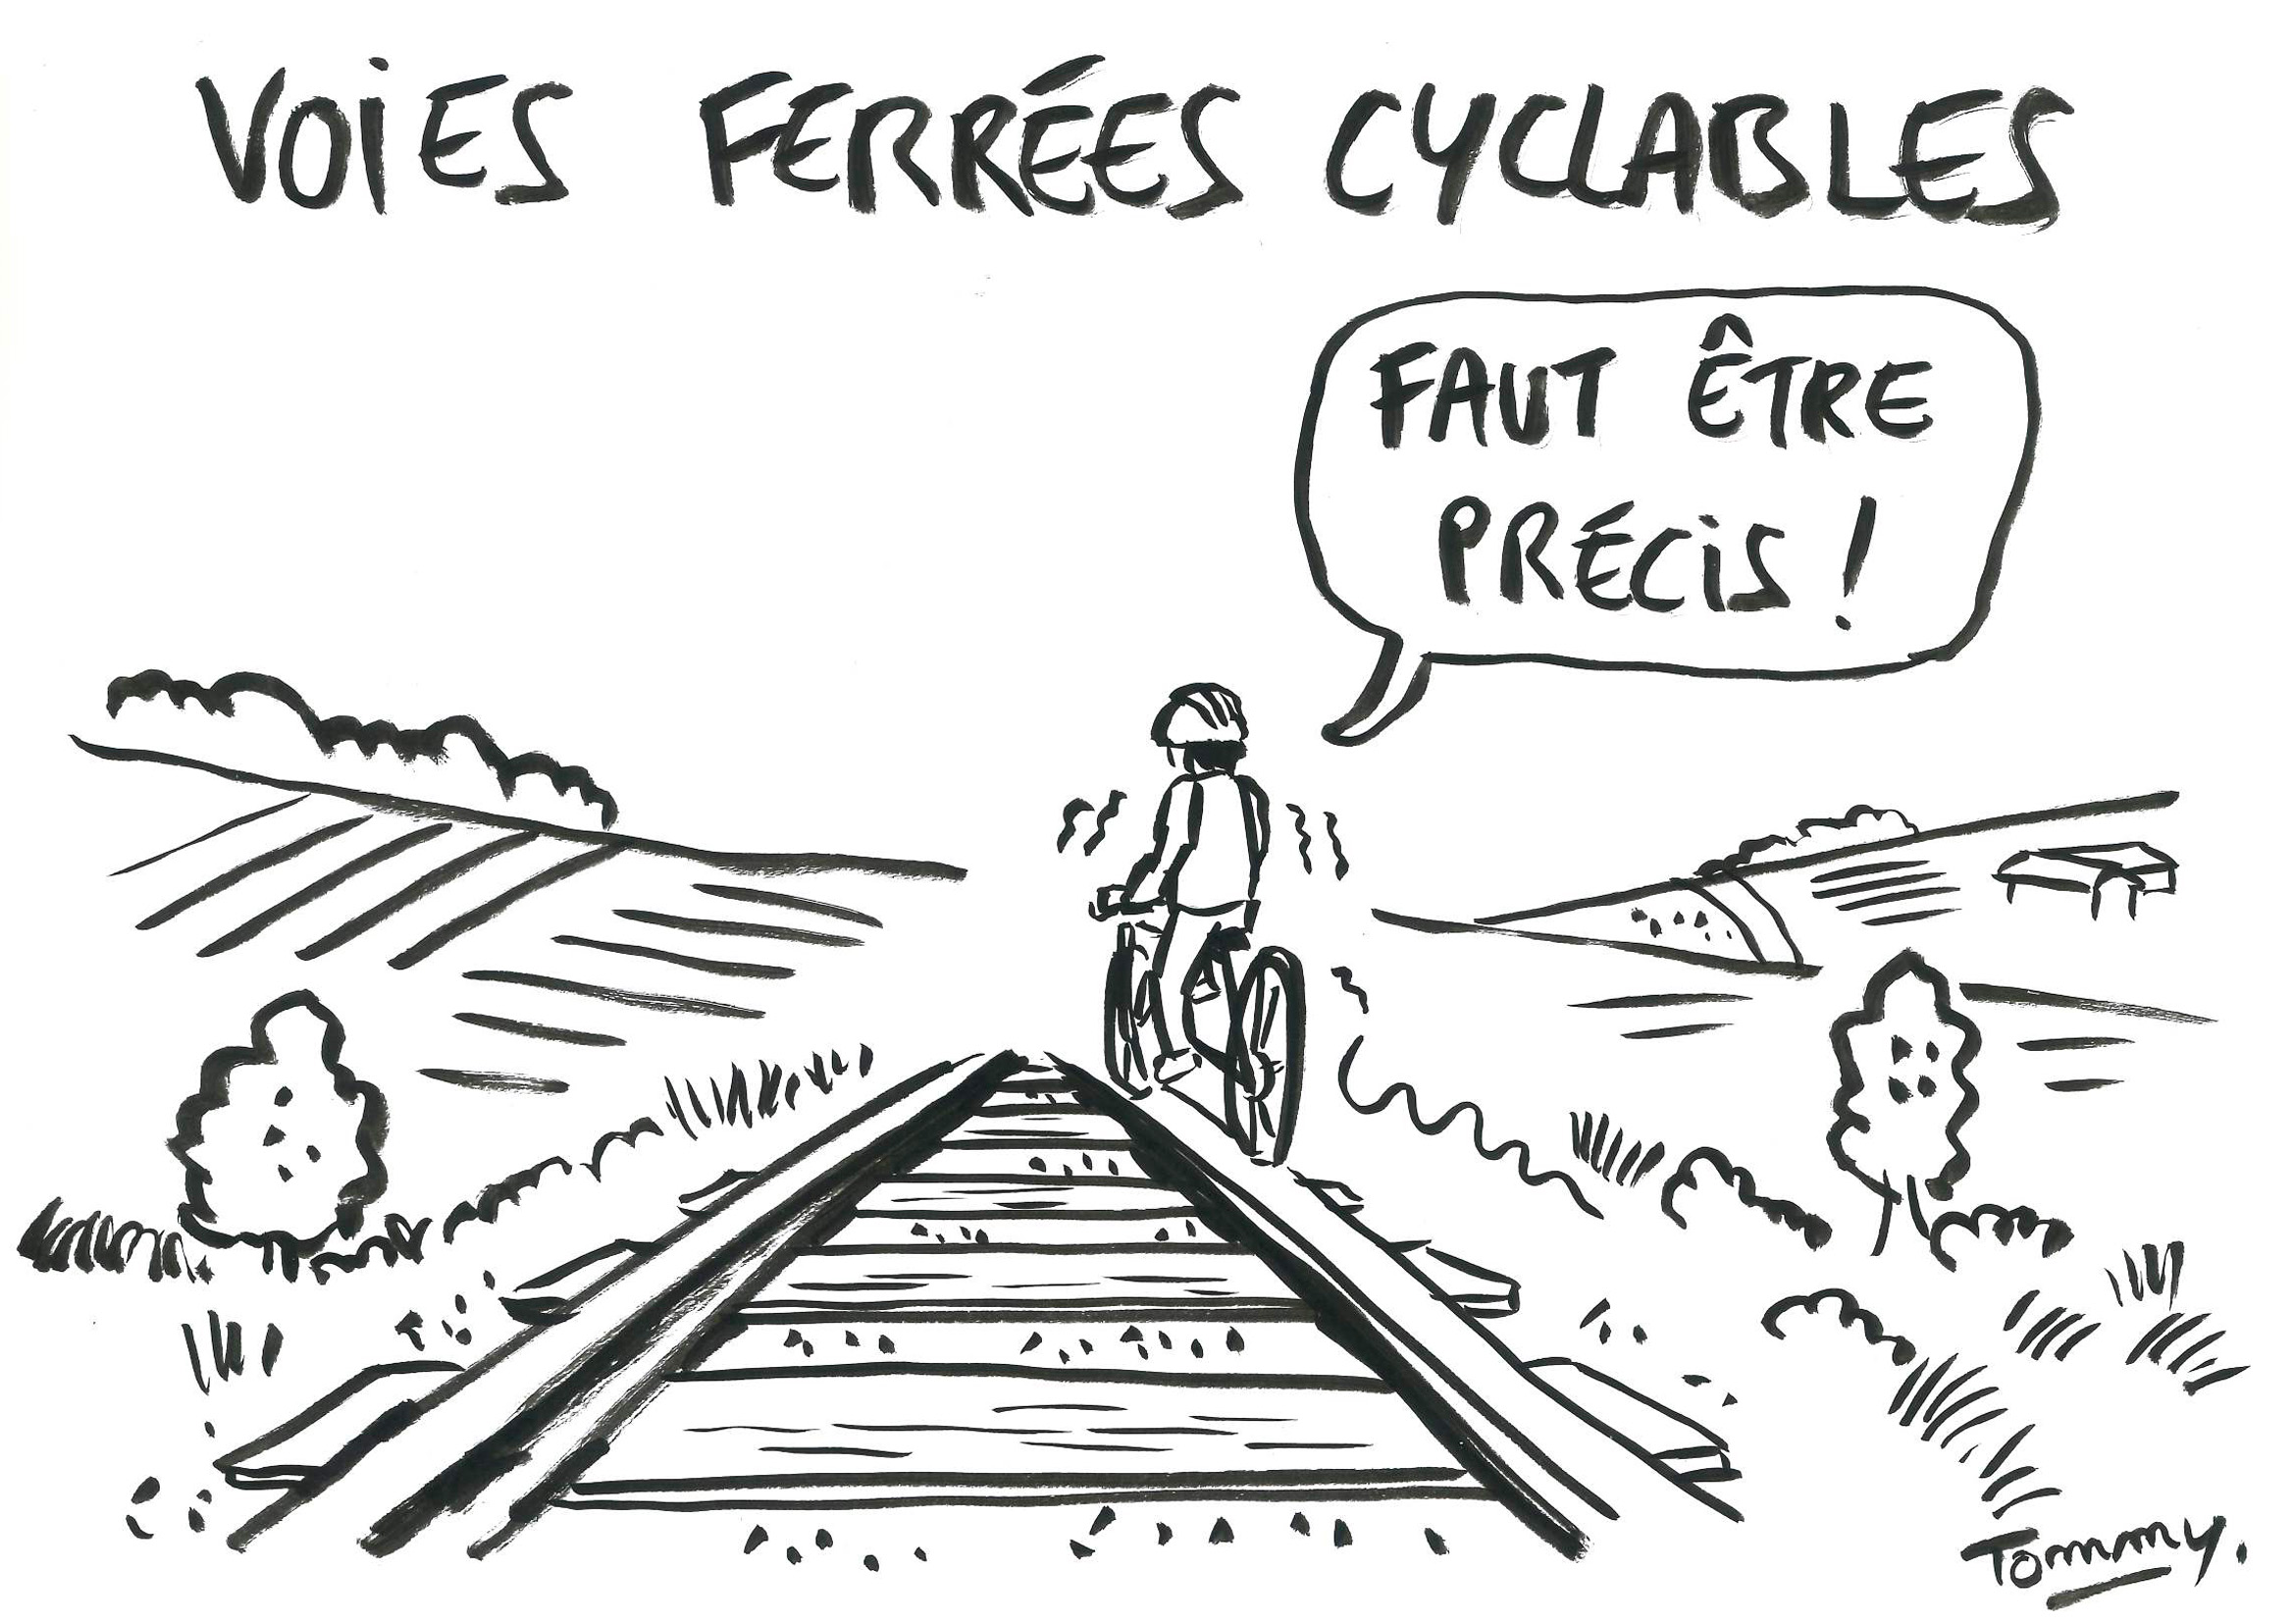 Bike-friendly railroads